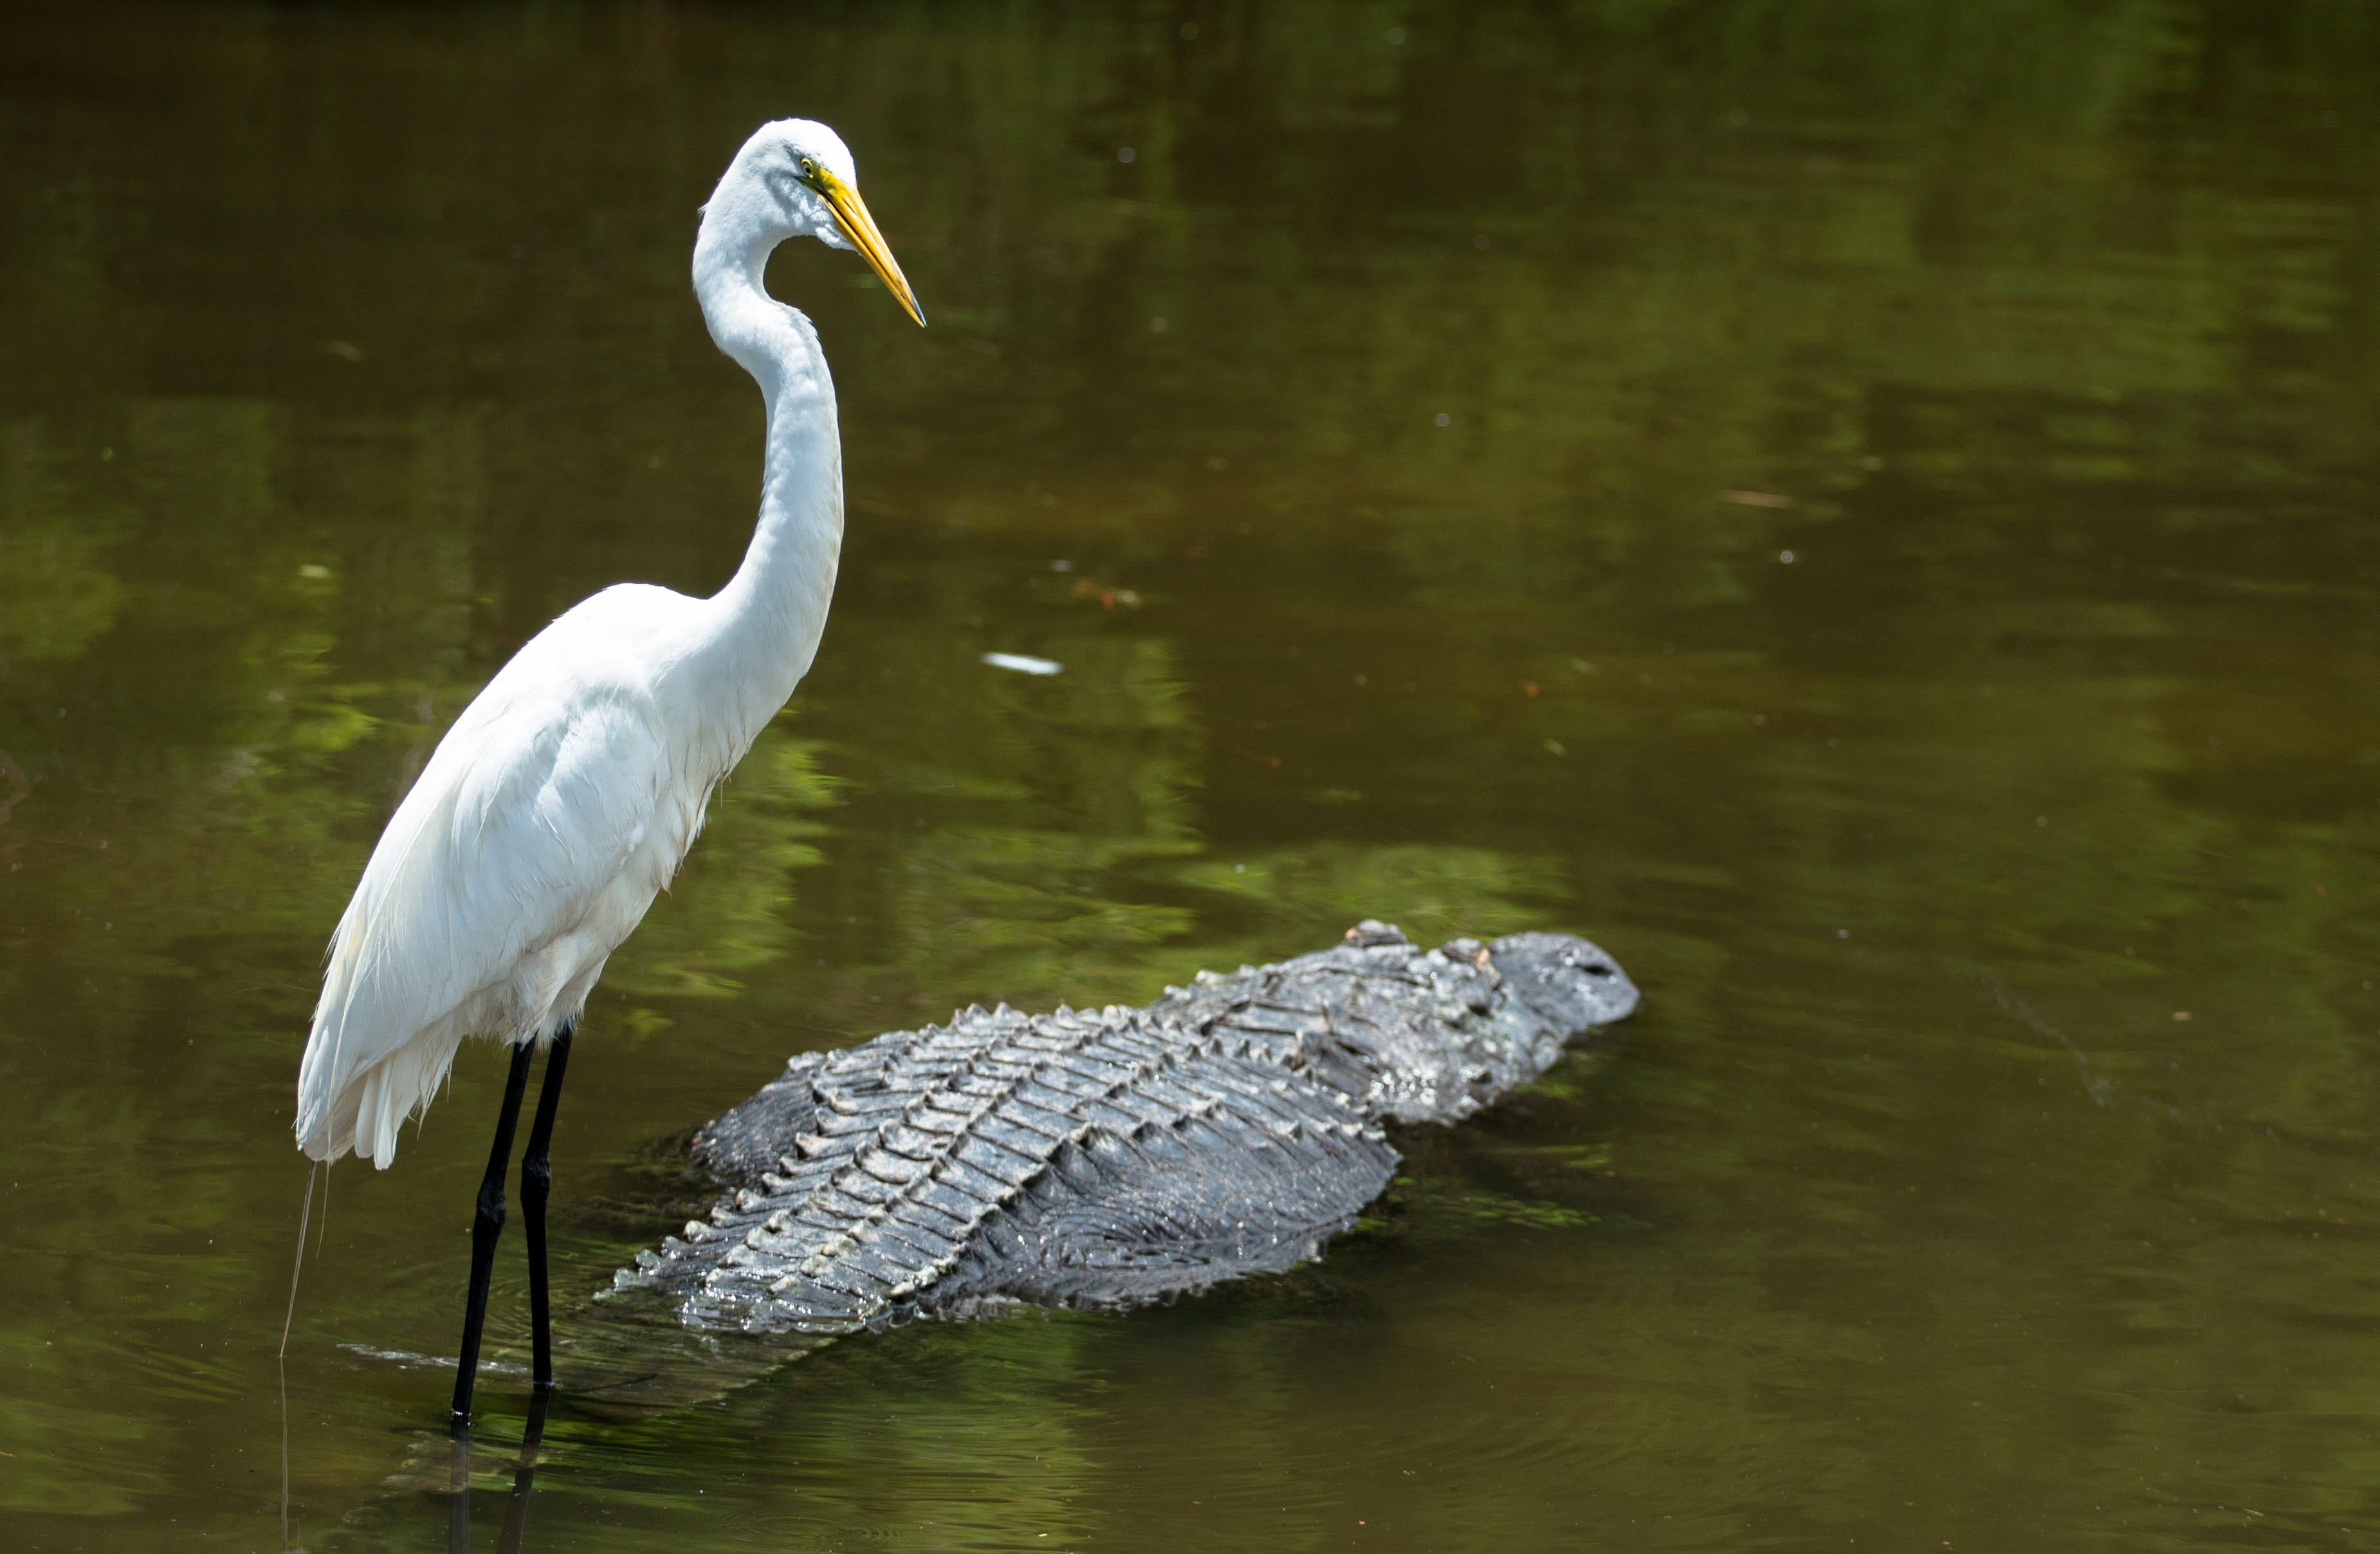 Ecoviews: Why do birds perch on alligators?